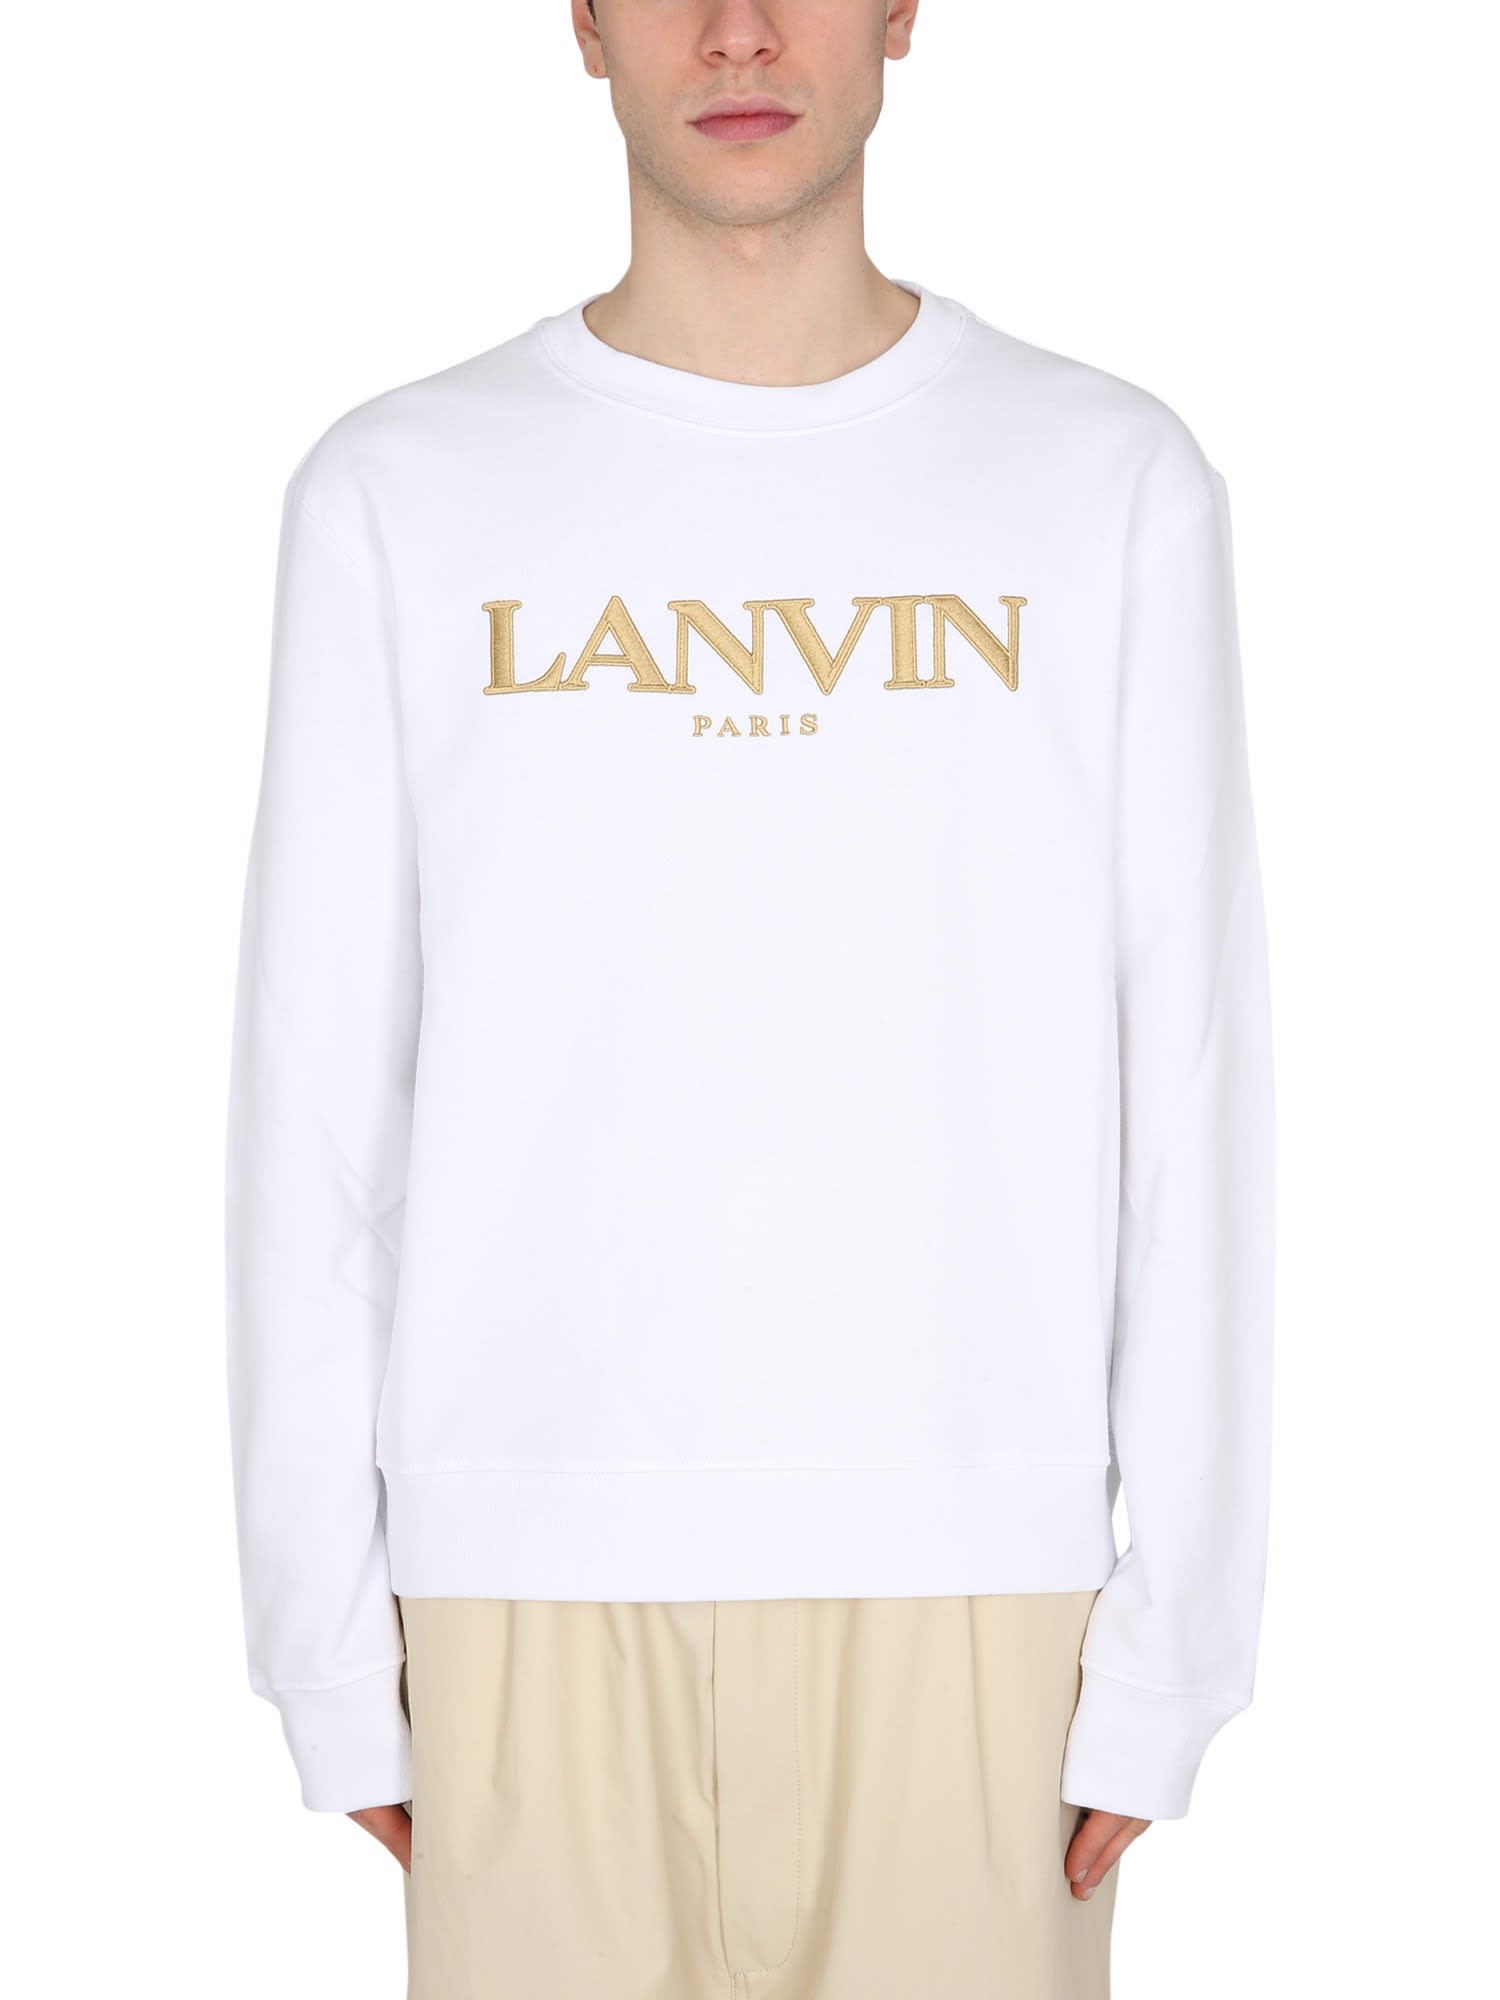 Lanvin Sweatshirt With Embroidered Logo